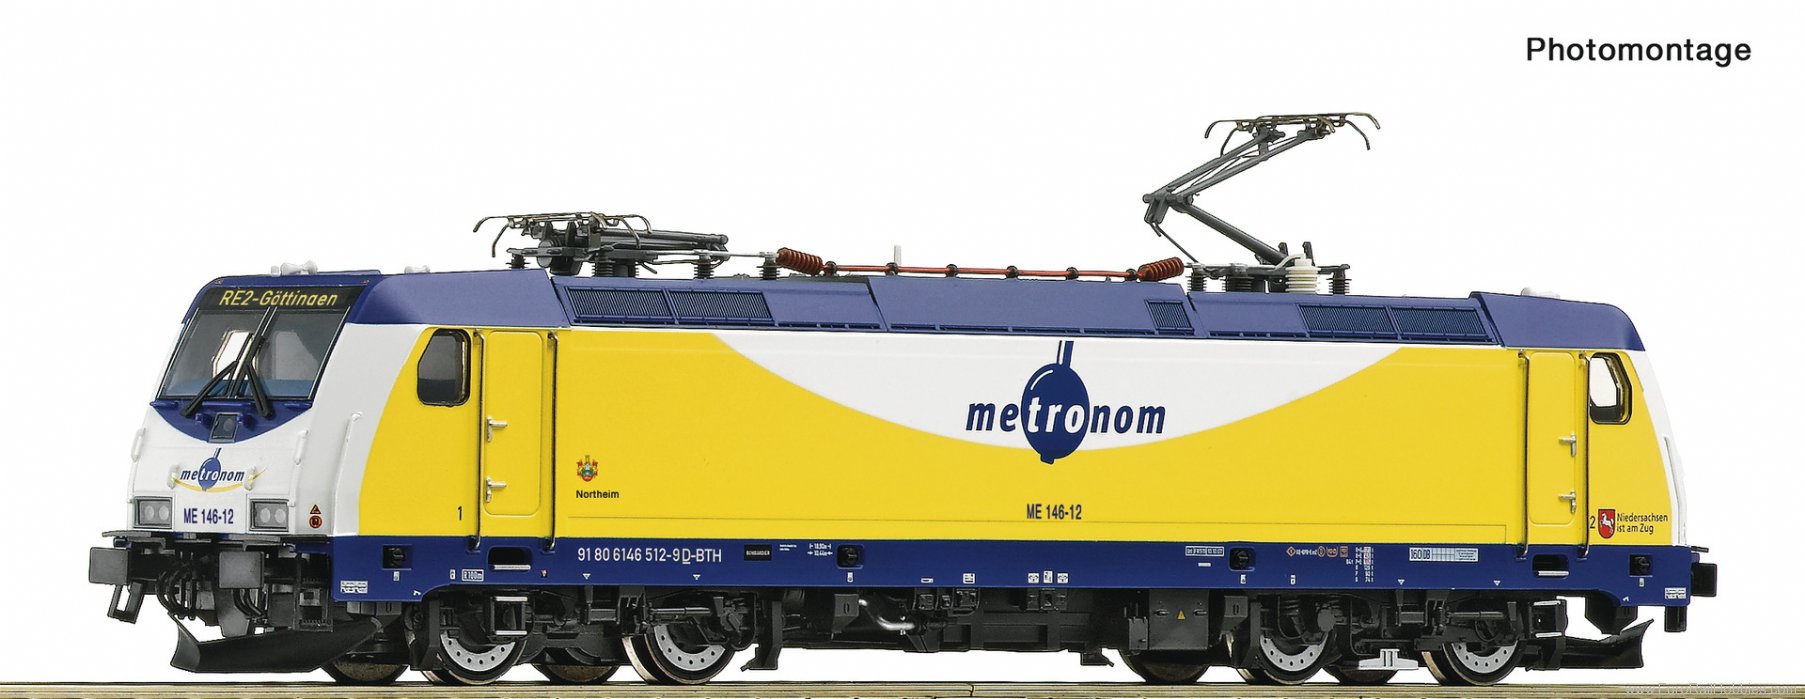 Roco 7520037 Electric locomotive ME 146-12, metronom (Mark